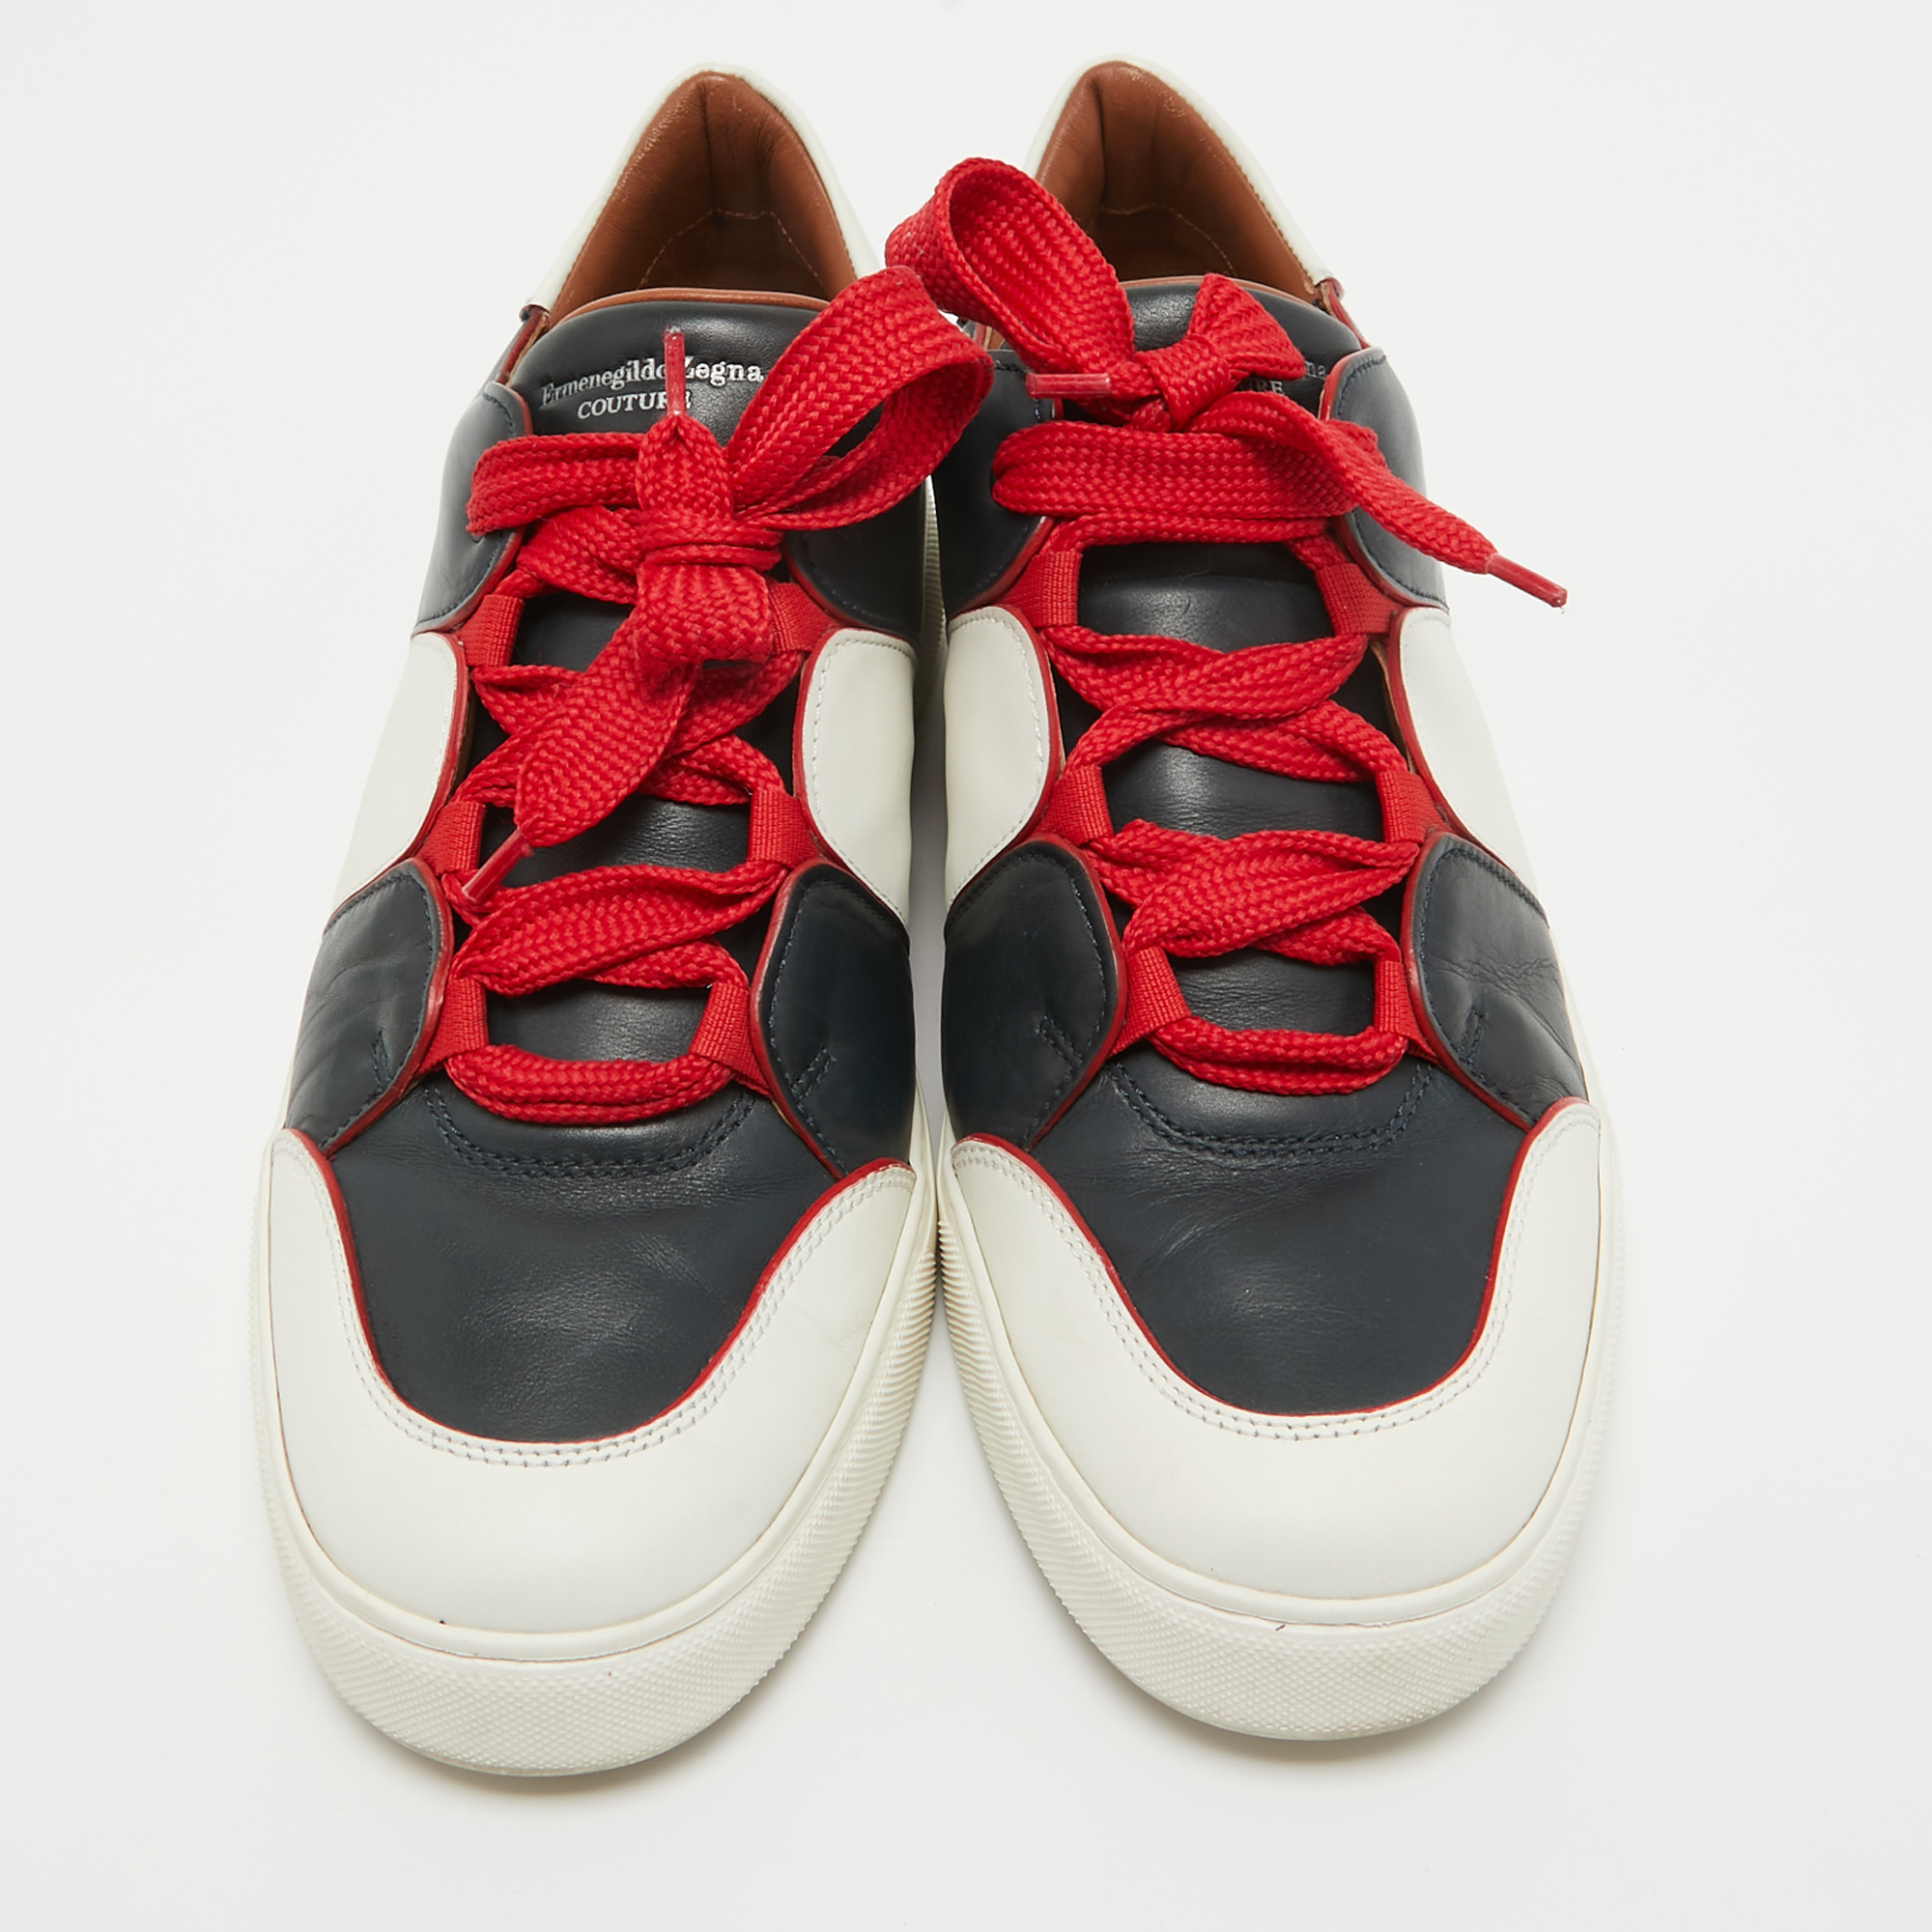 Ermenegildo Zegna Navy Blue/White Leather Low Top Sneakers Size 44